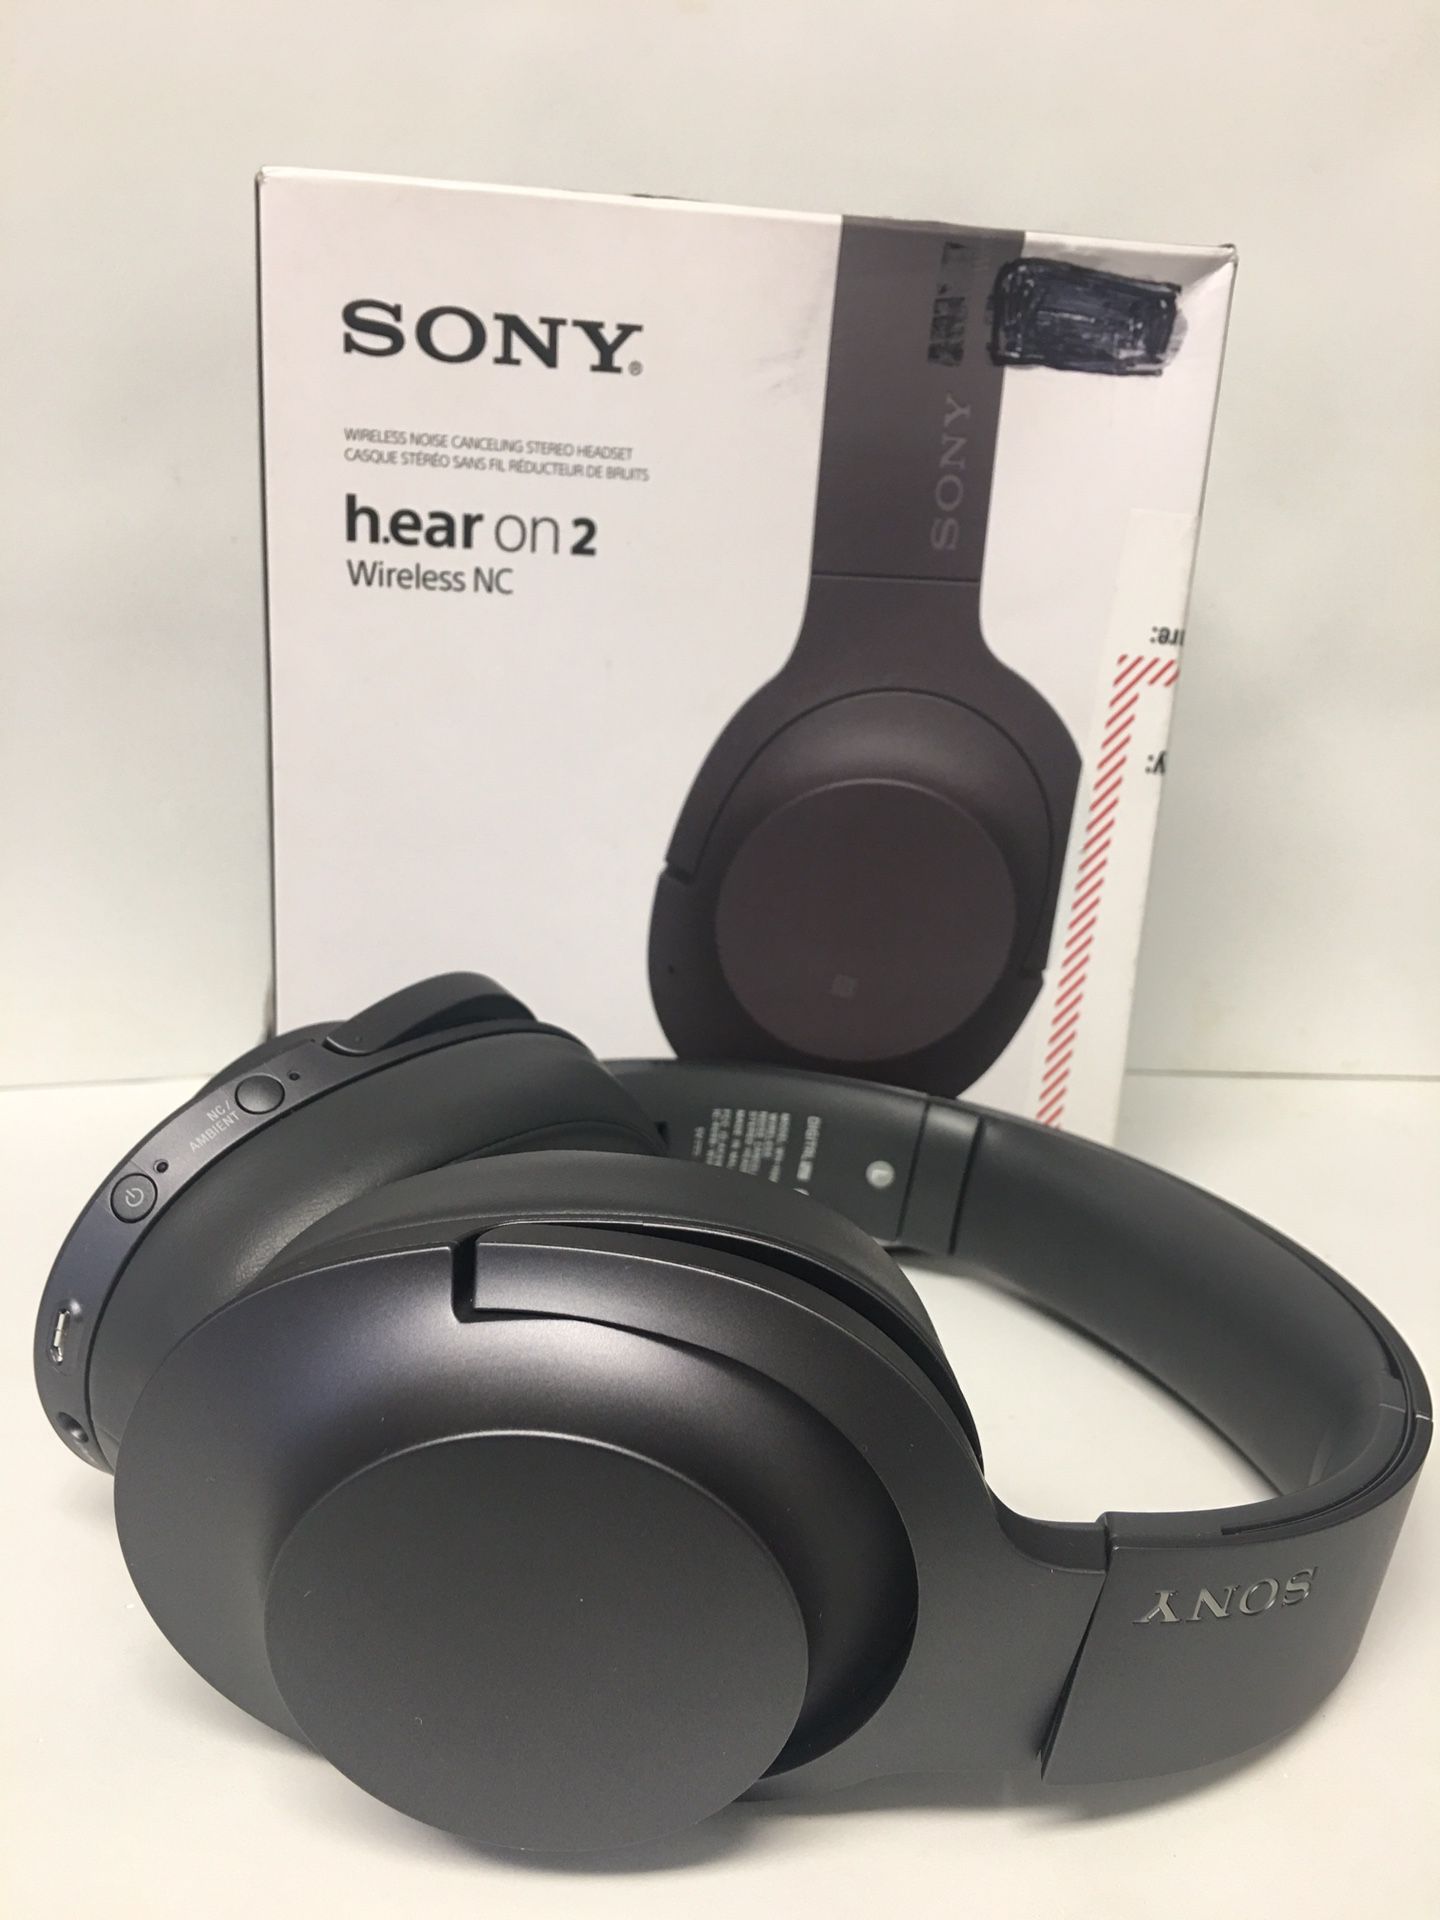 SONY h ear on 2 wireless Nc Headphones NEW